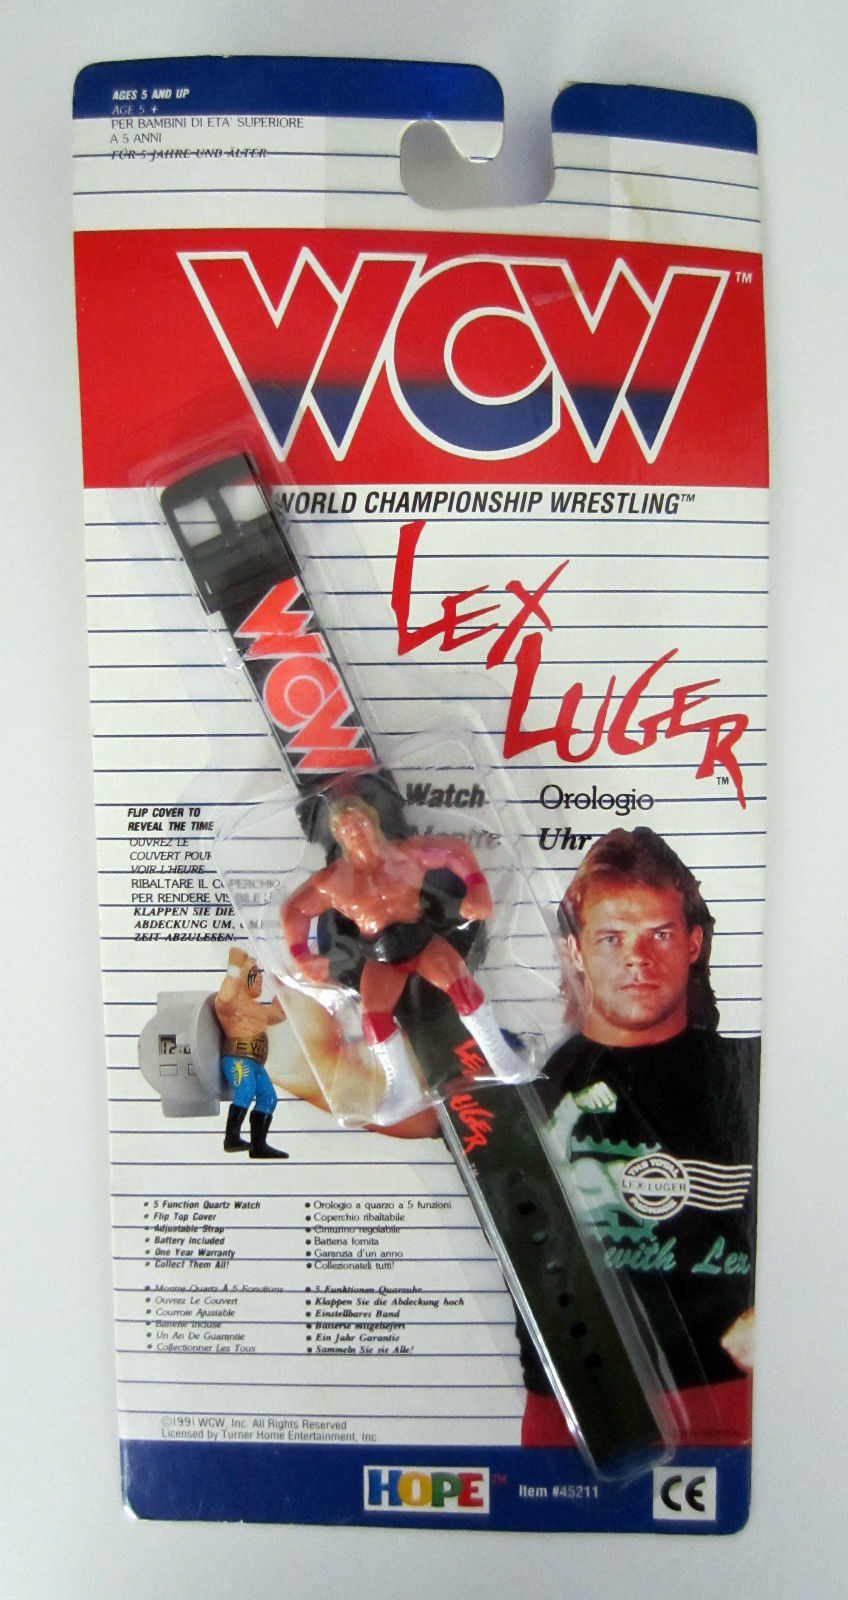 WCW-Lex-Luger-Wristwatch-watch.jpg